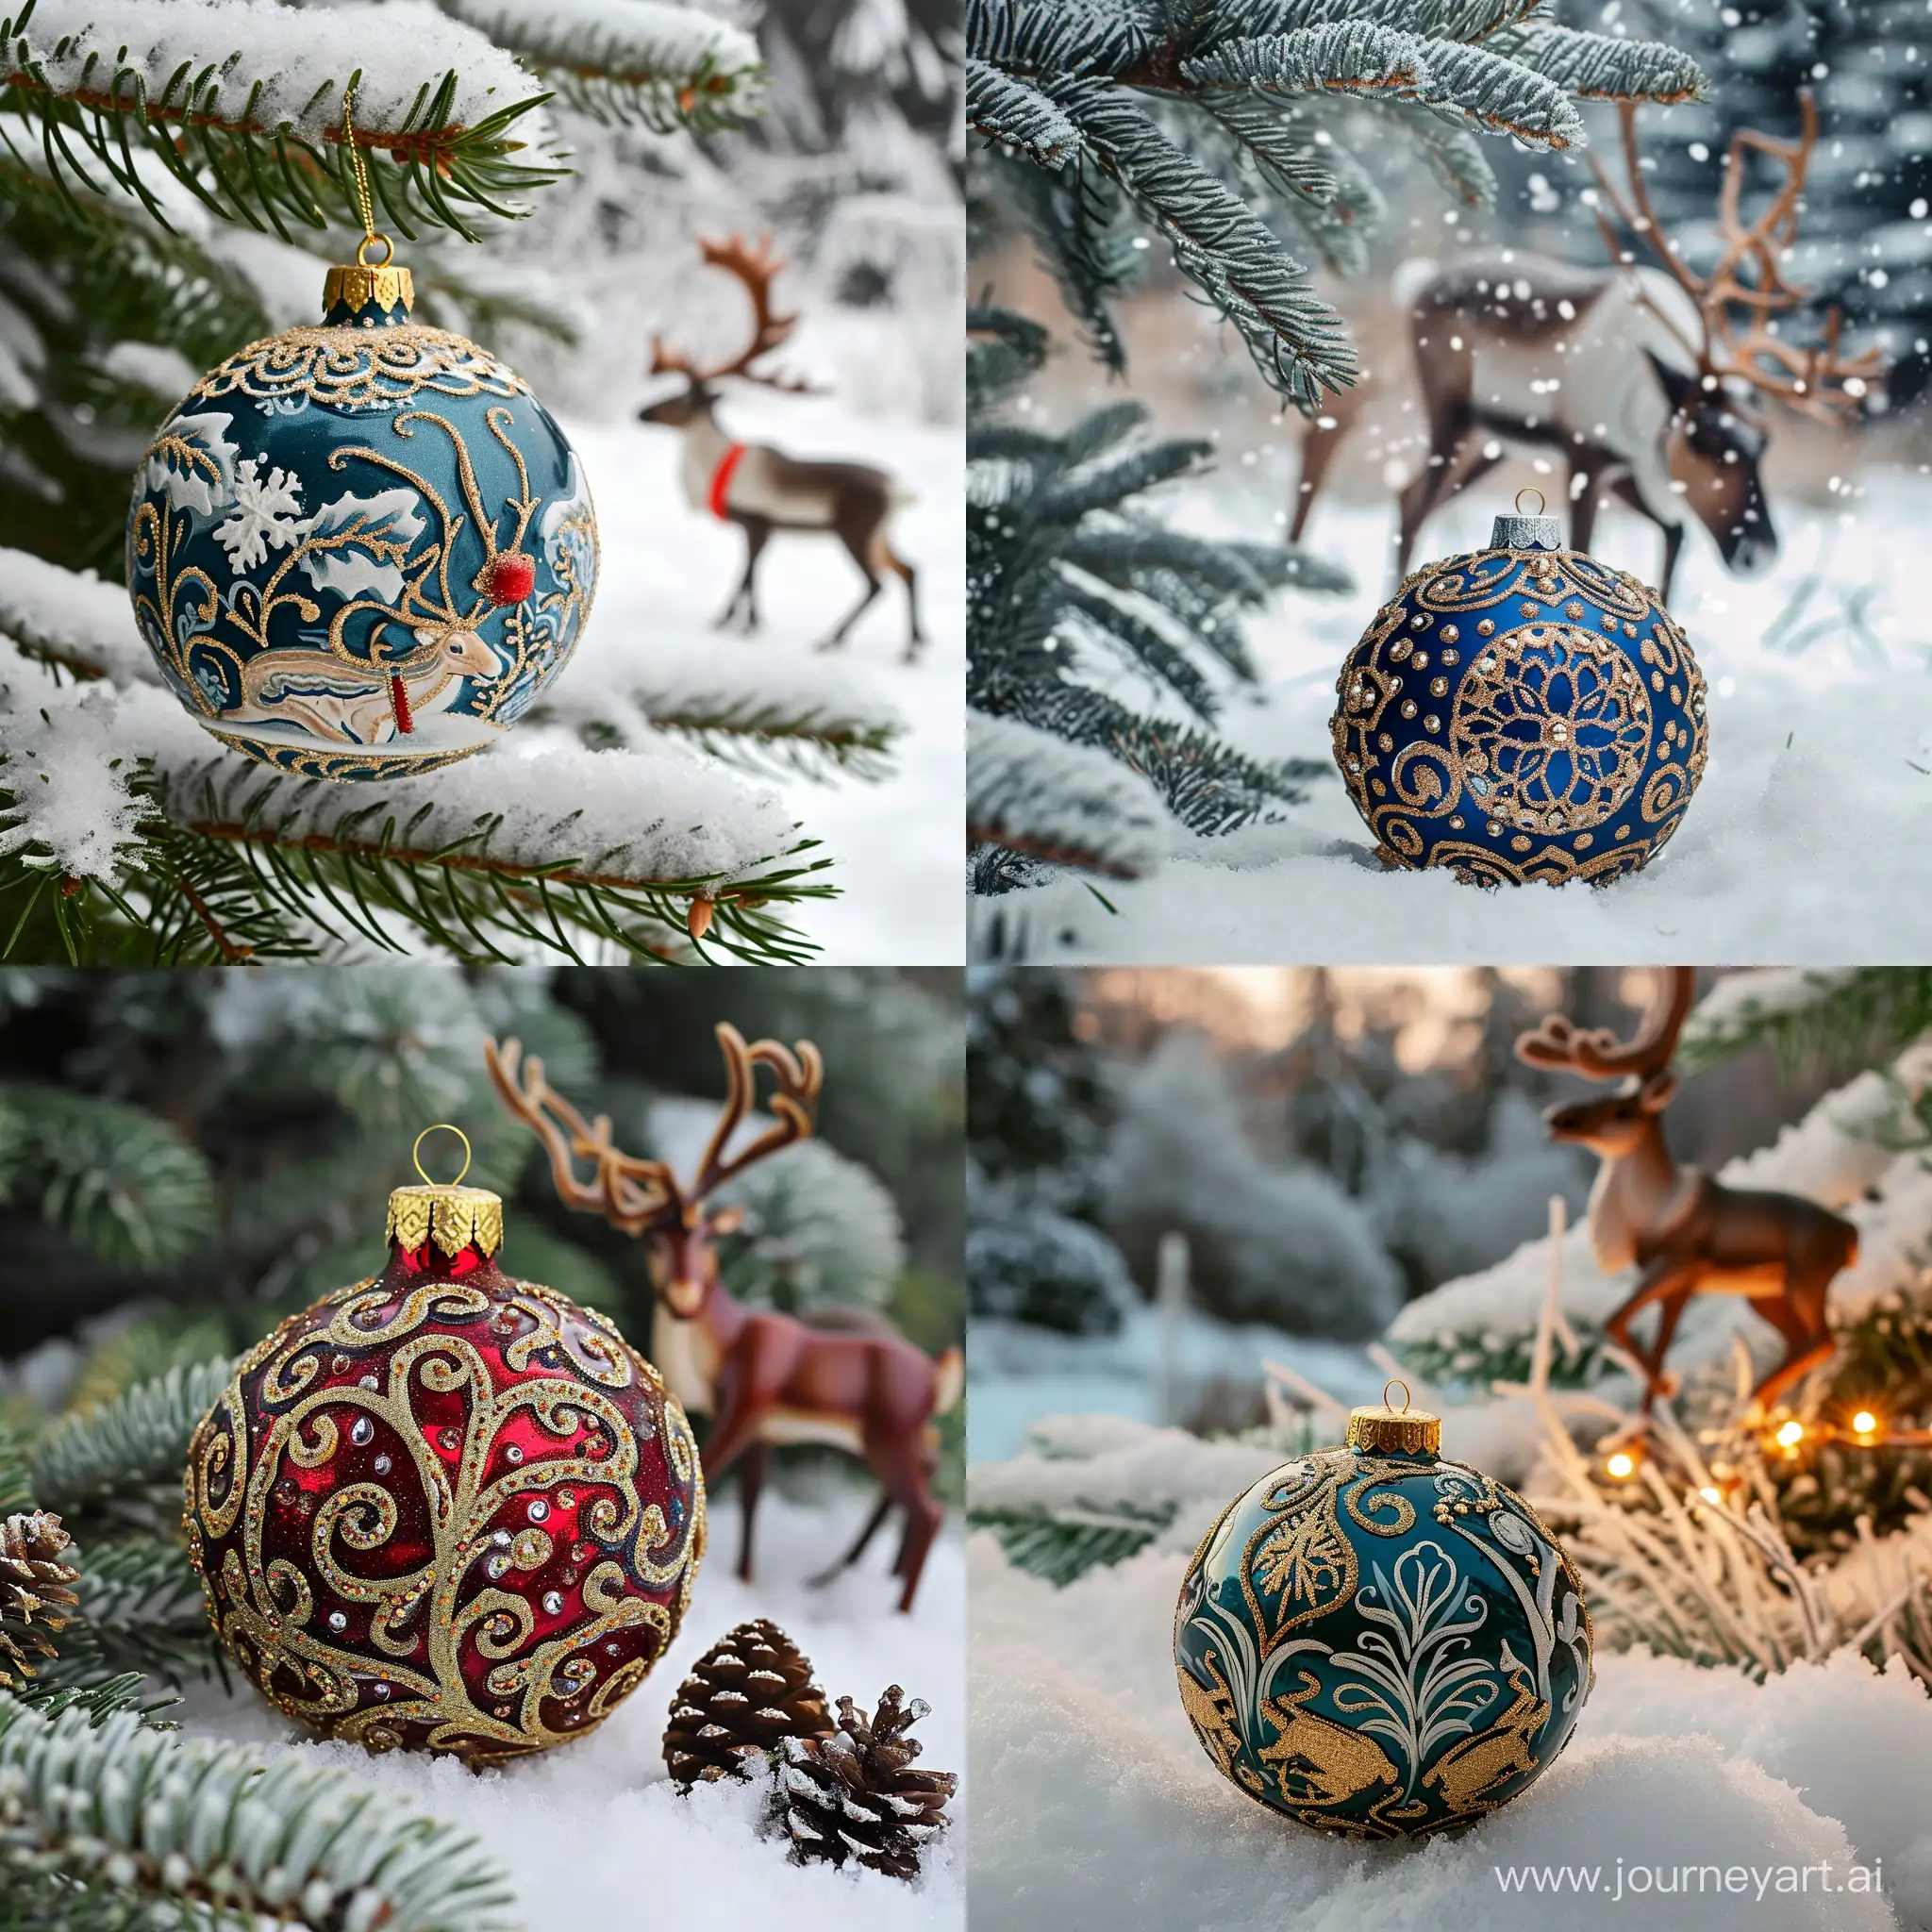 Snowy-Reindeer-Scene-with-Yamal-Ornament